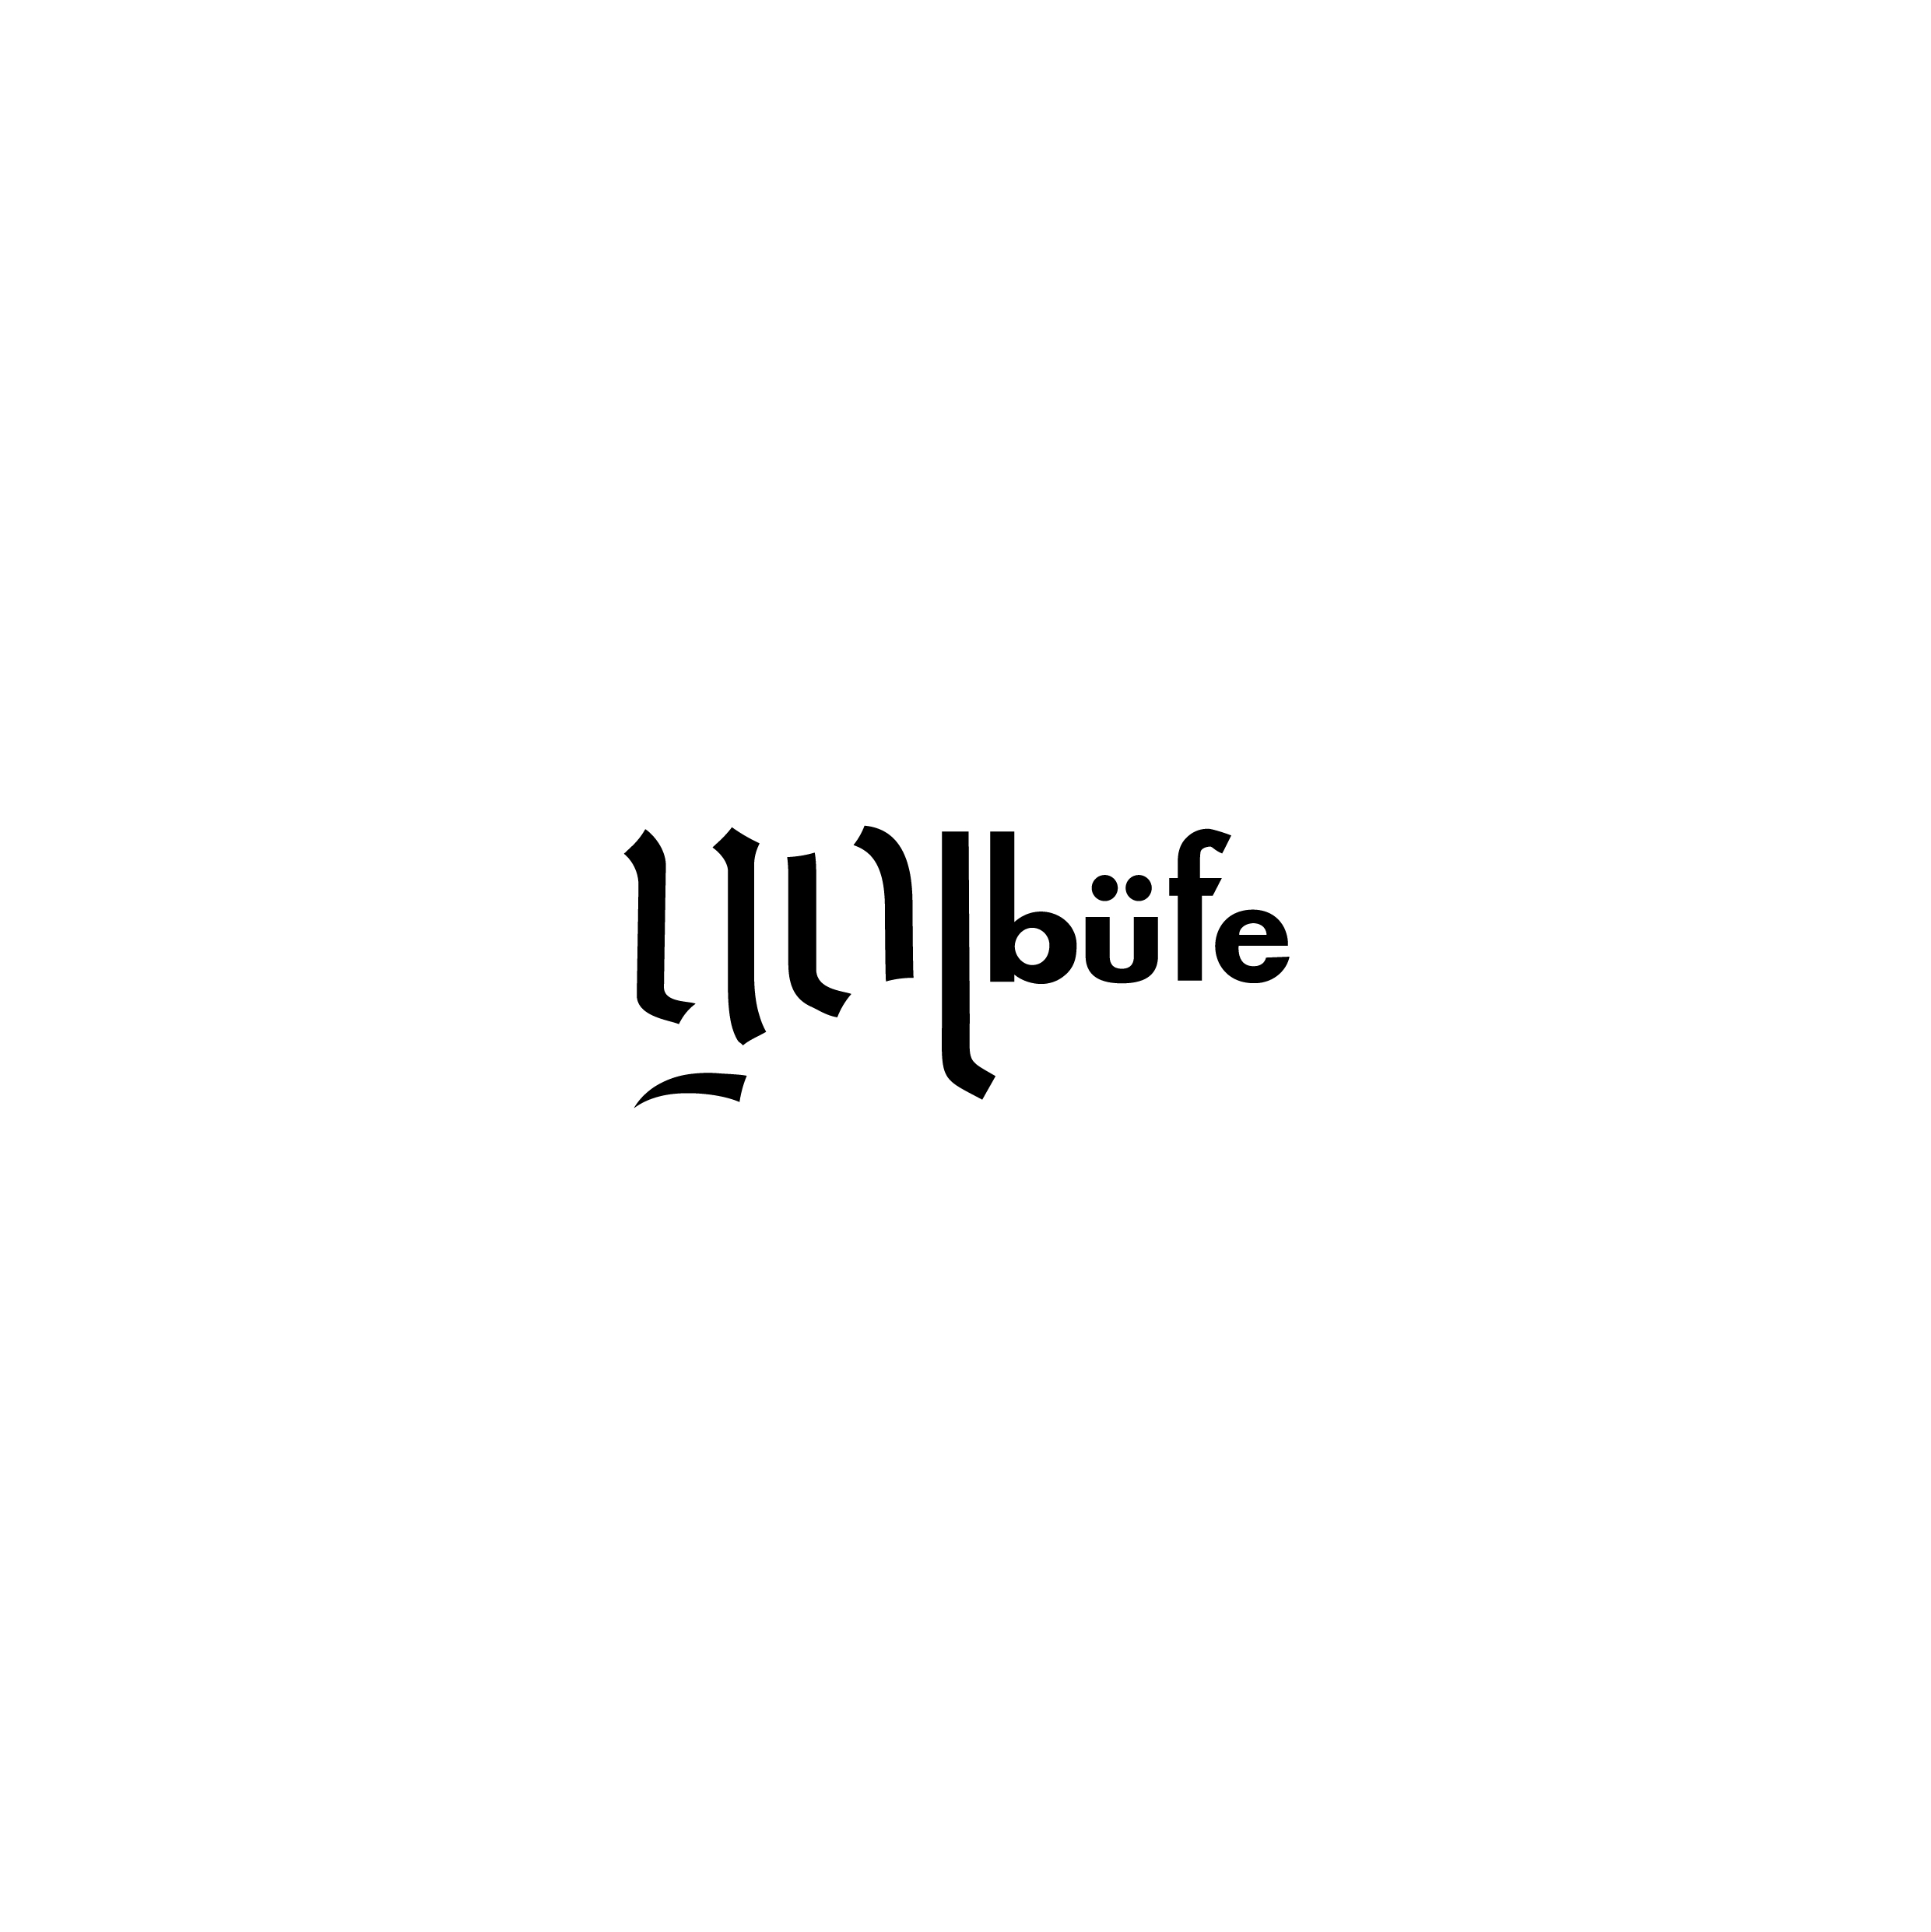 yol_bufe_logo_08_16_2022-03